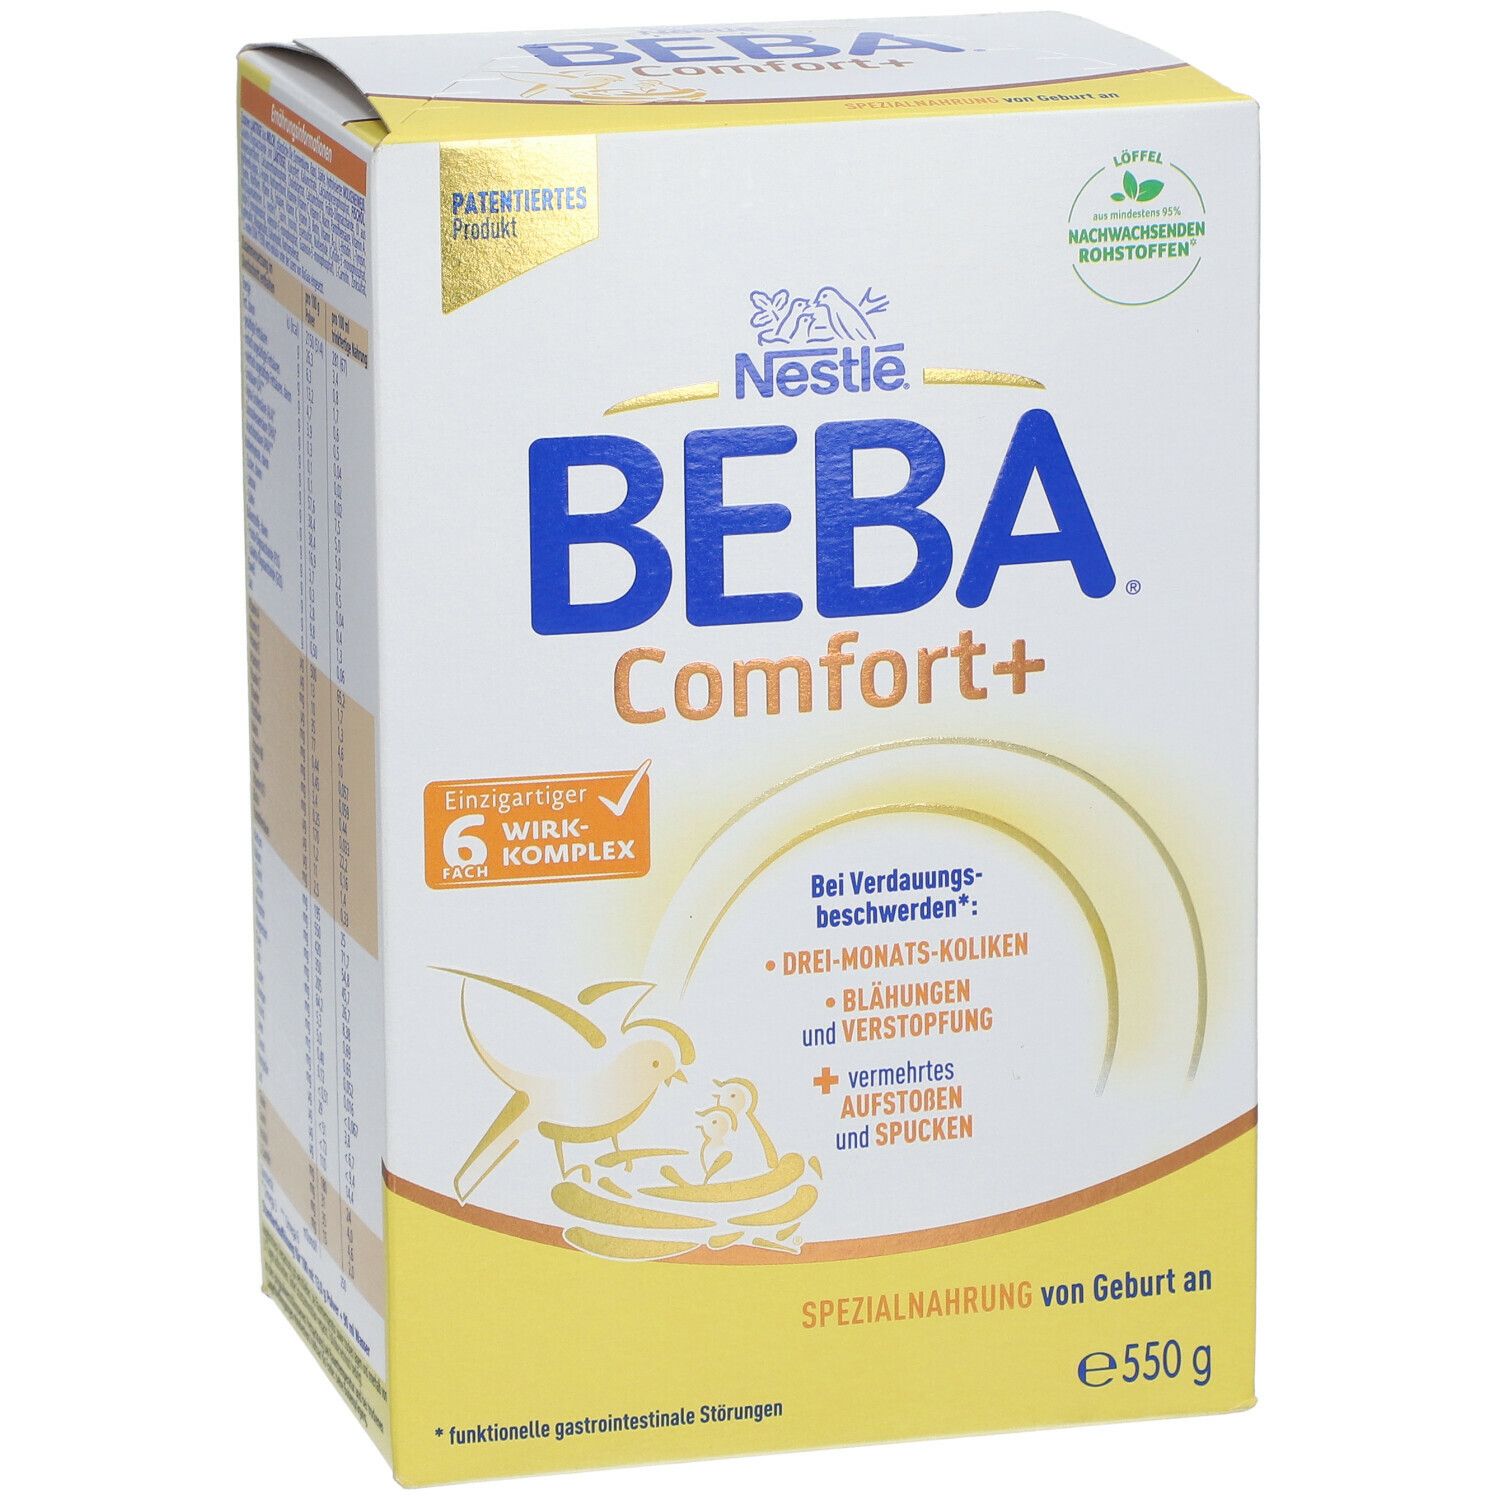 Nestlé BEBA® Comfort+ Spezialnahrung von Geburt an